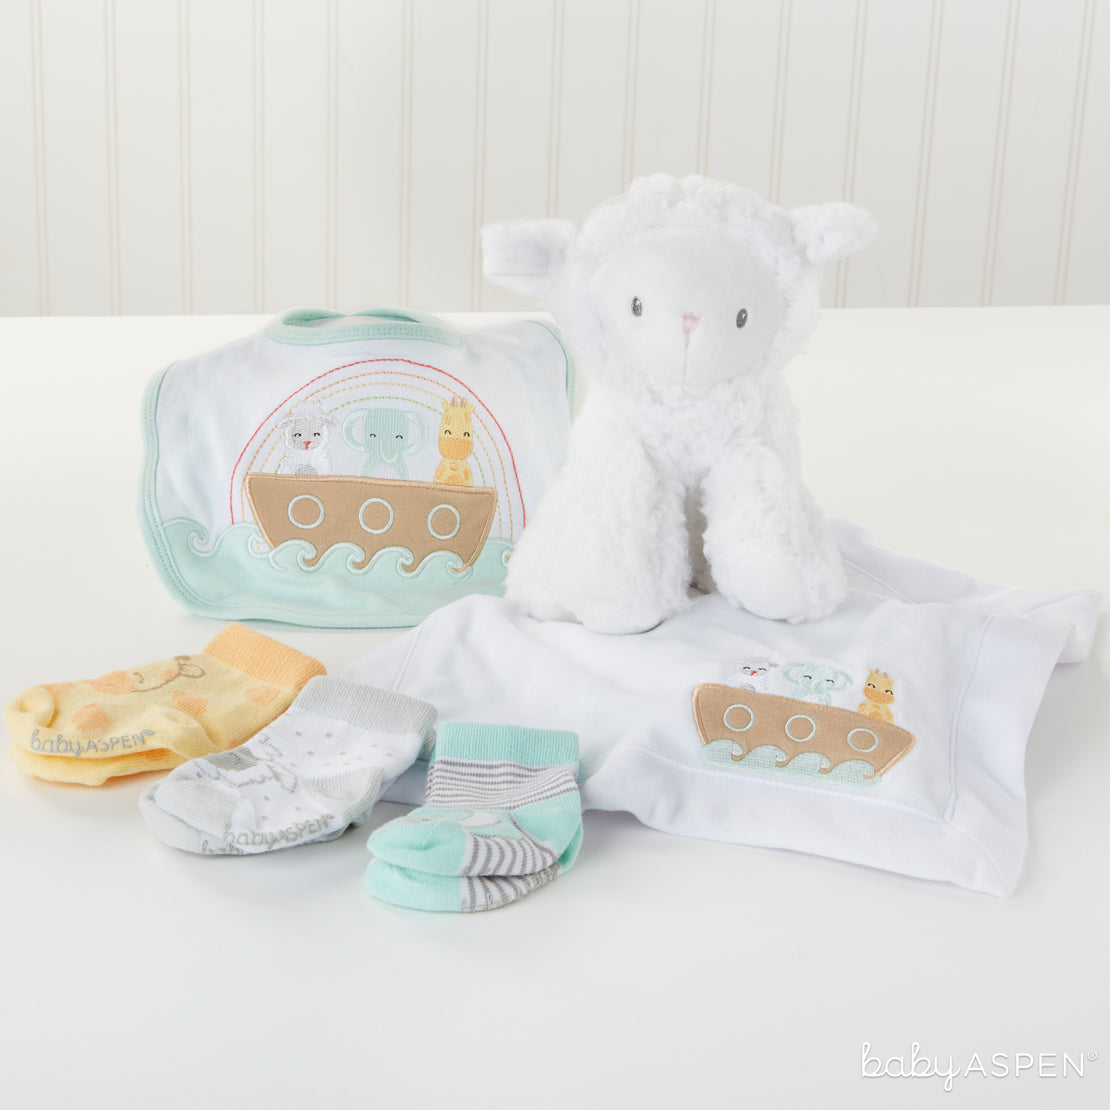 Noah's Ark Gift Set | Noah's Ark Themed Gifts For Your Biblical Baby | Baby Aspen